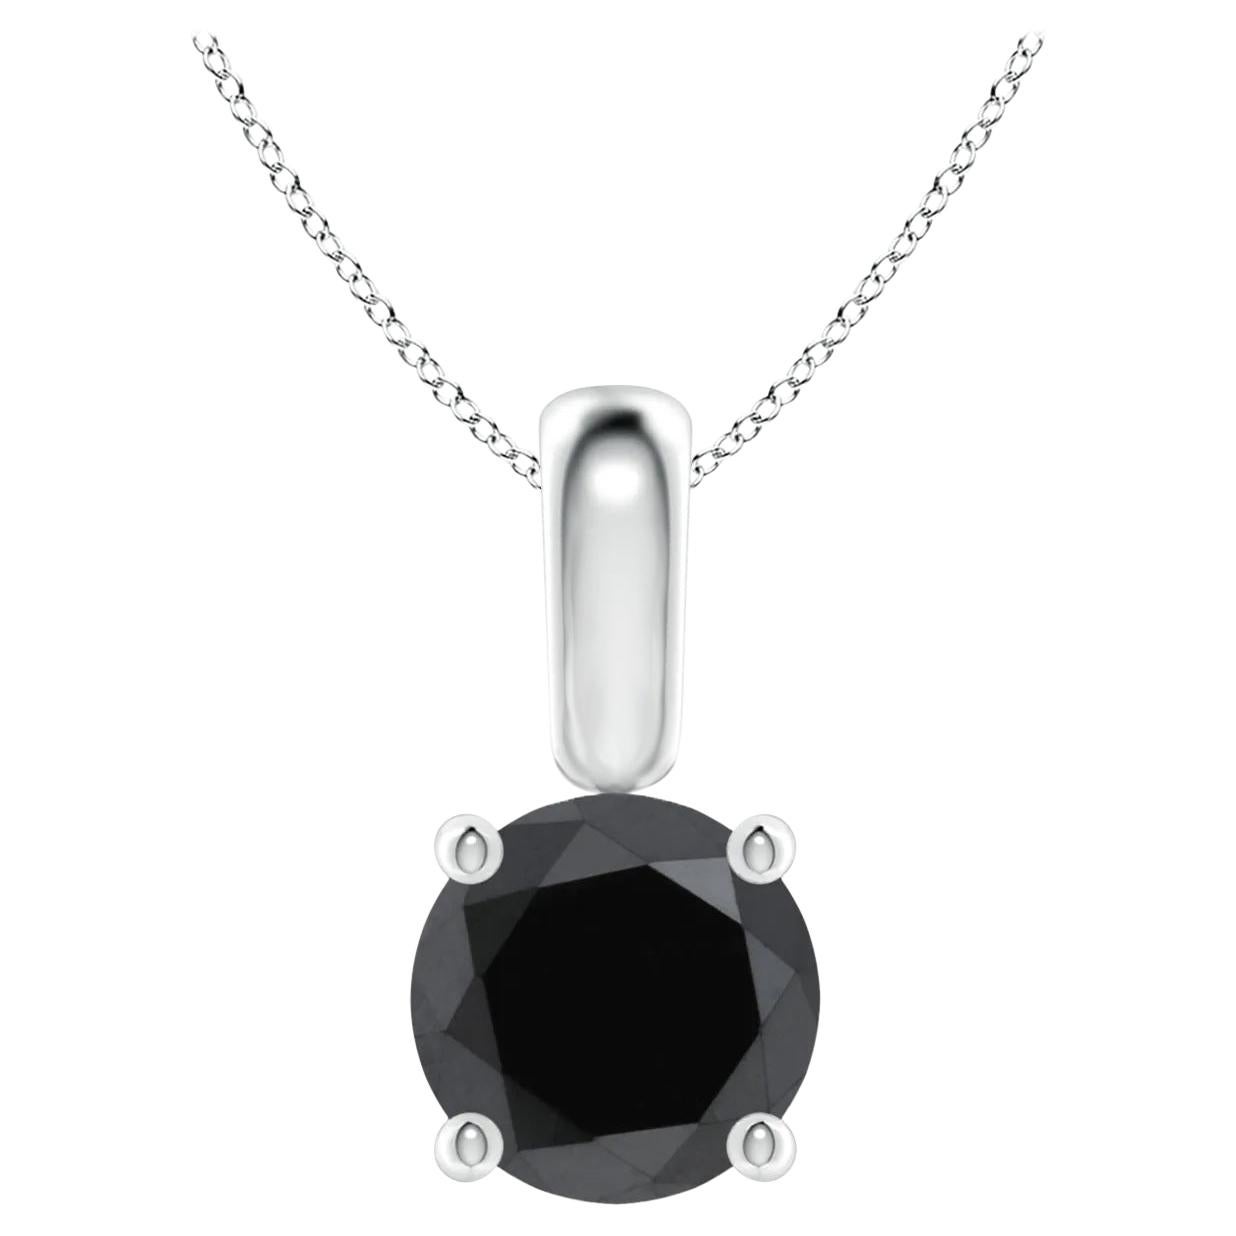 1.9 Carat Round Black Diamond Solitaire Pendant Necklace in 14K White Gold